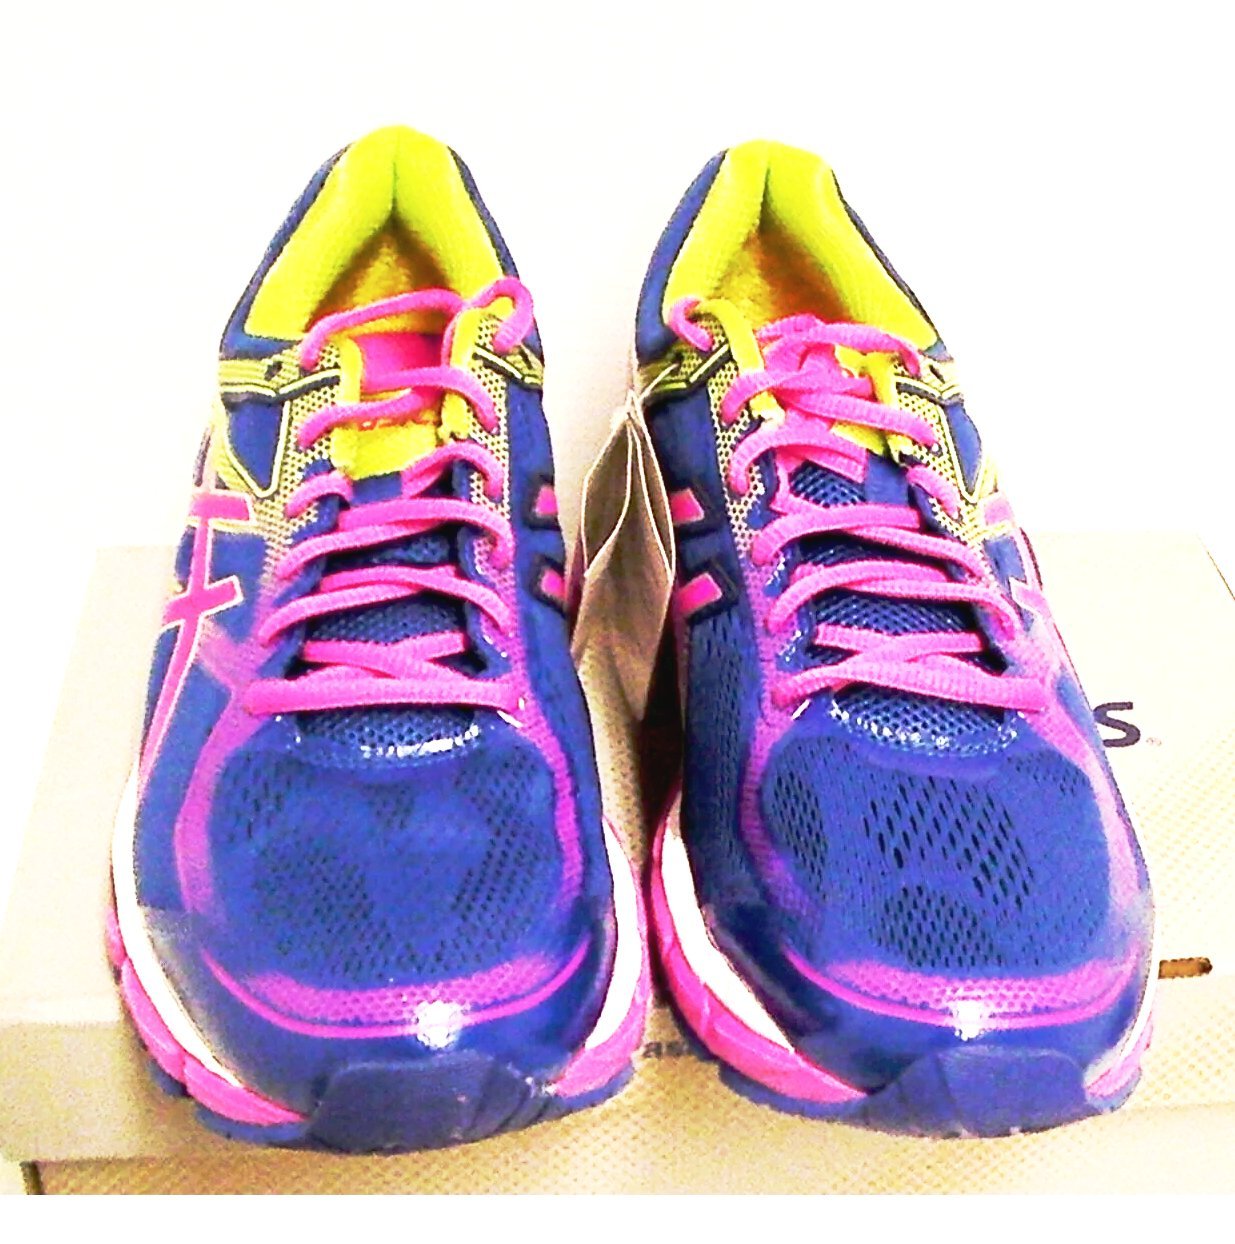 Asics women's running shoes gel surveyor 5 blue pink lime size 9 us